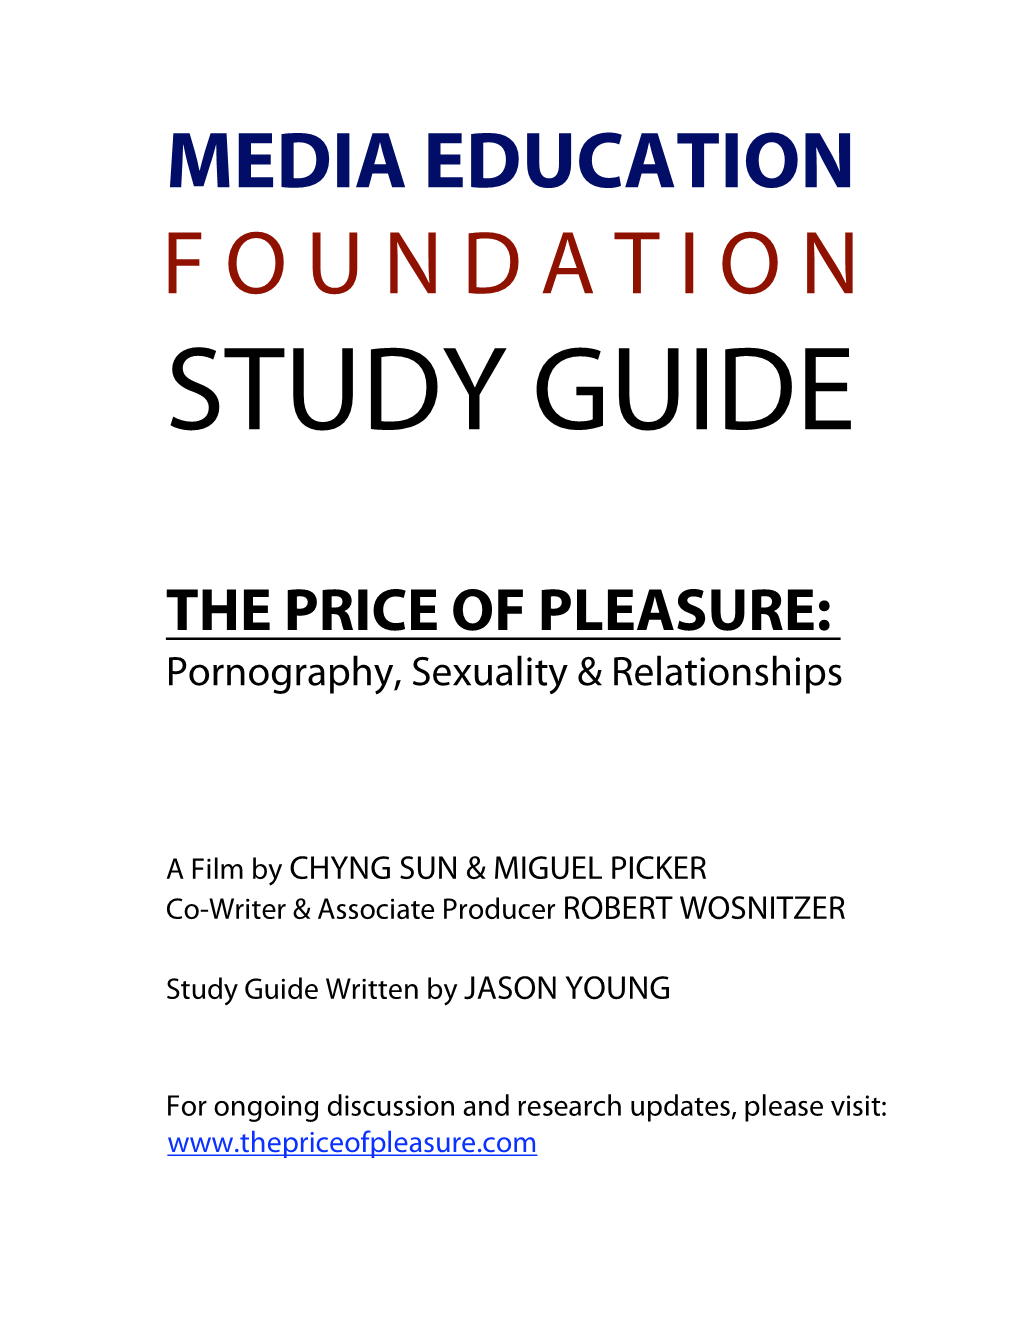 Study Guide: the Price of Pleasure